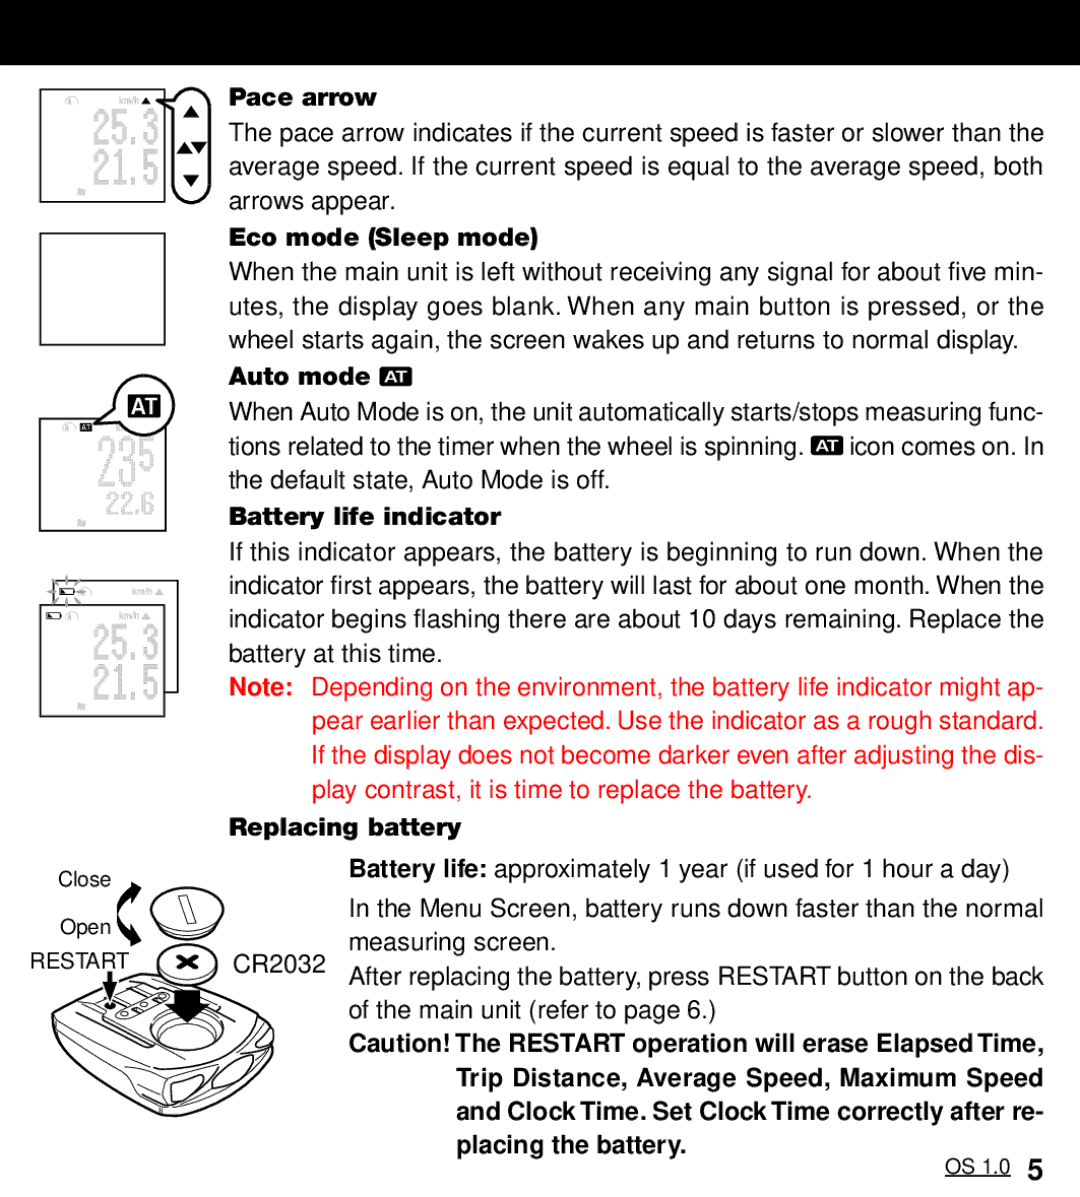 Cateye OS 1.0 manual Pace arrow, Eco mode Sleep mode, Auto mode, Battery life indicator, Replacing battery 